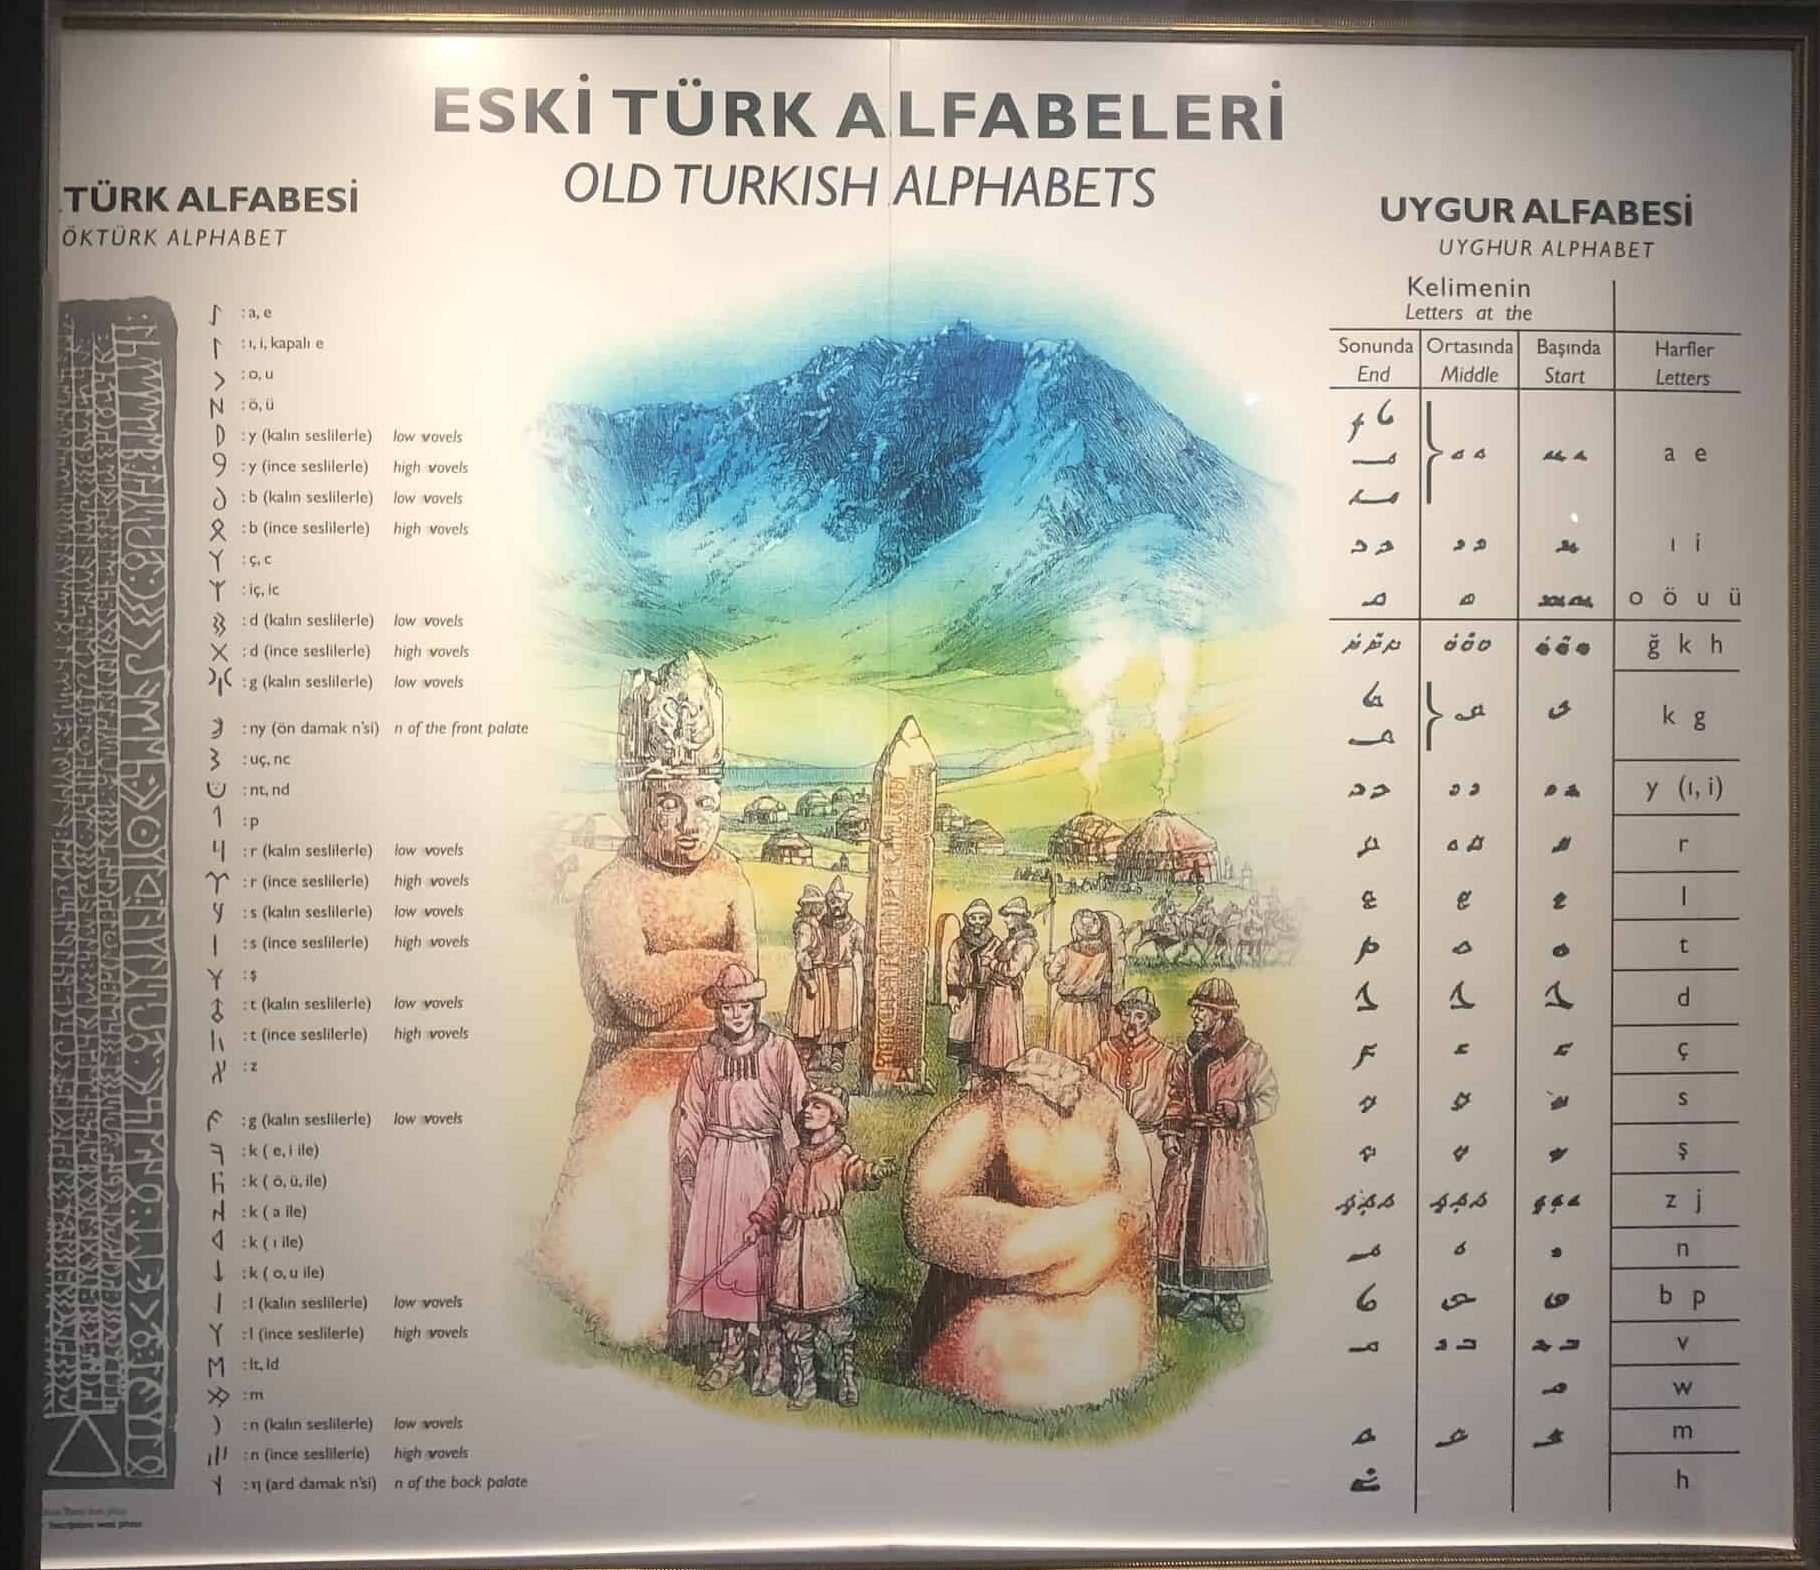 Göktürk and Uyghur alphabets at the Harbiye Military Museum in Istanbul, Turkey